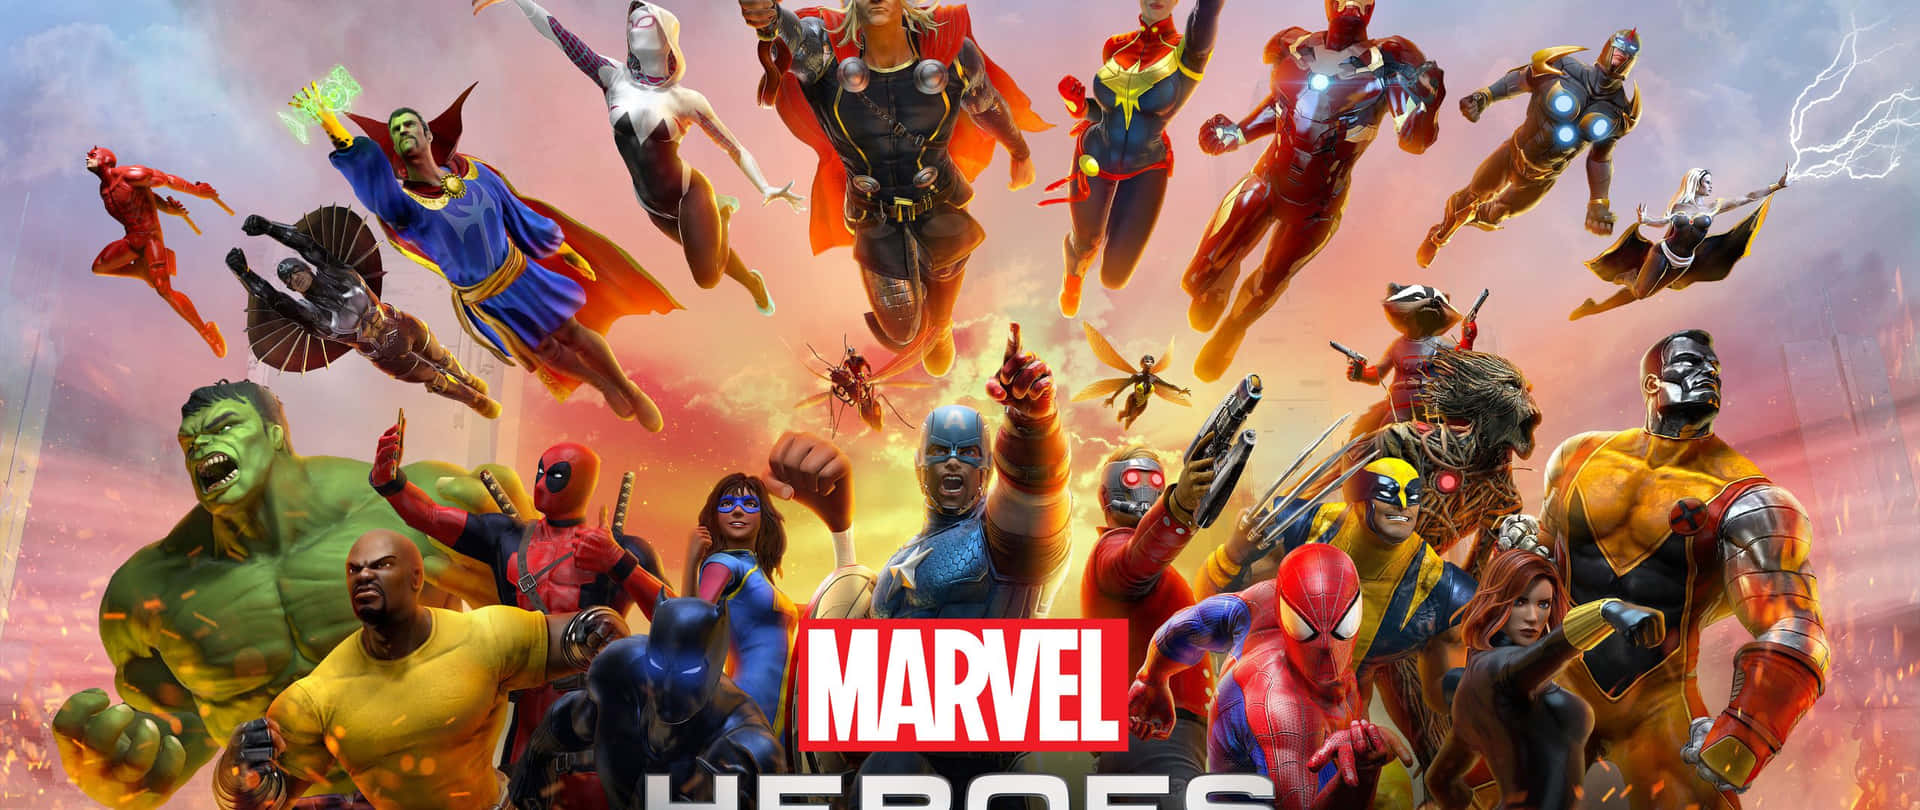 2560x 1080 Marvel Superhelden Sammlung Wallpaper